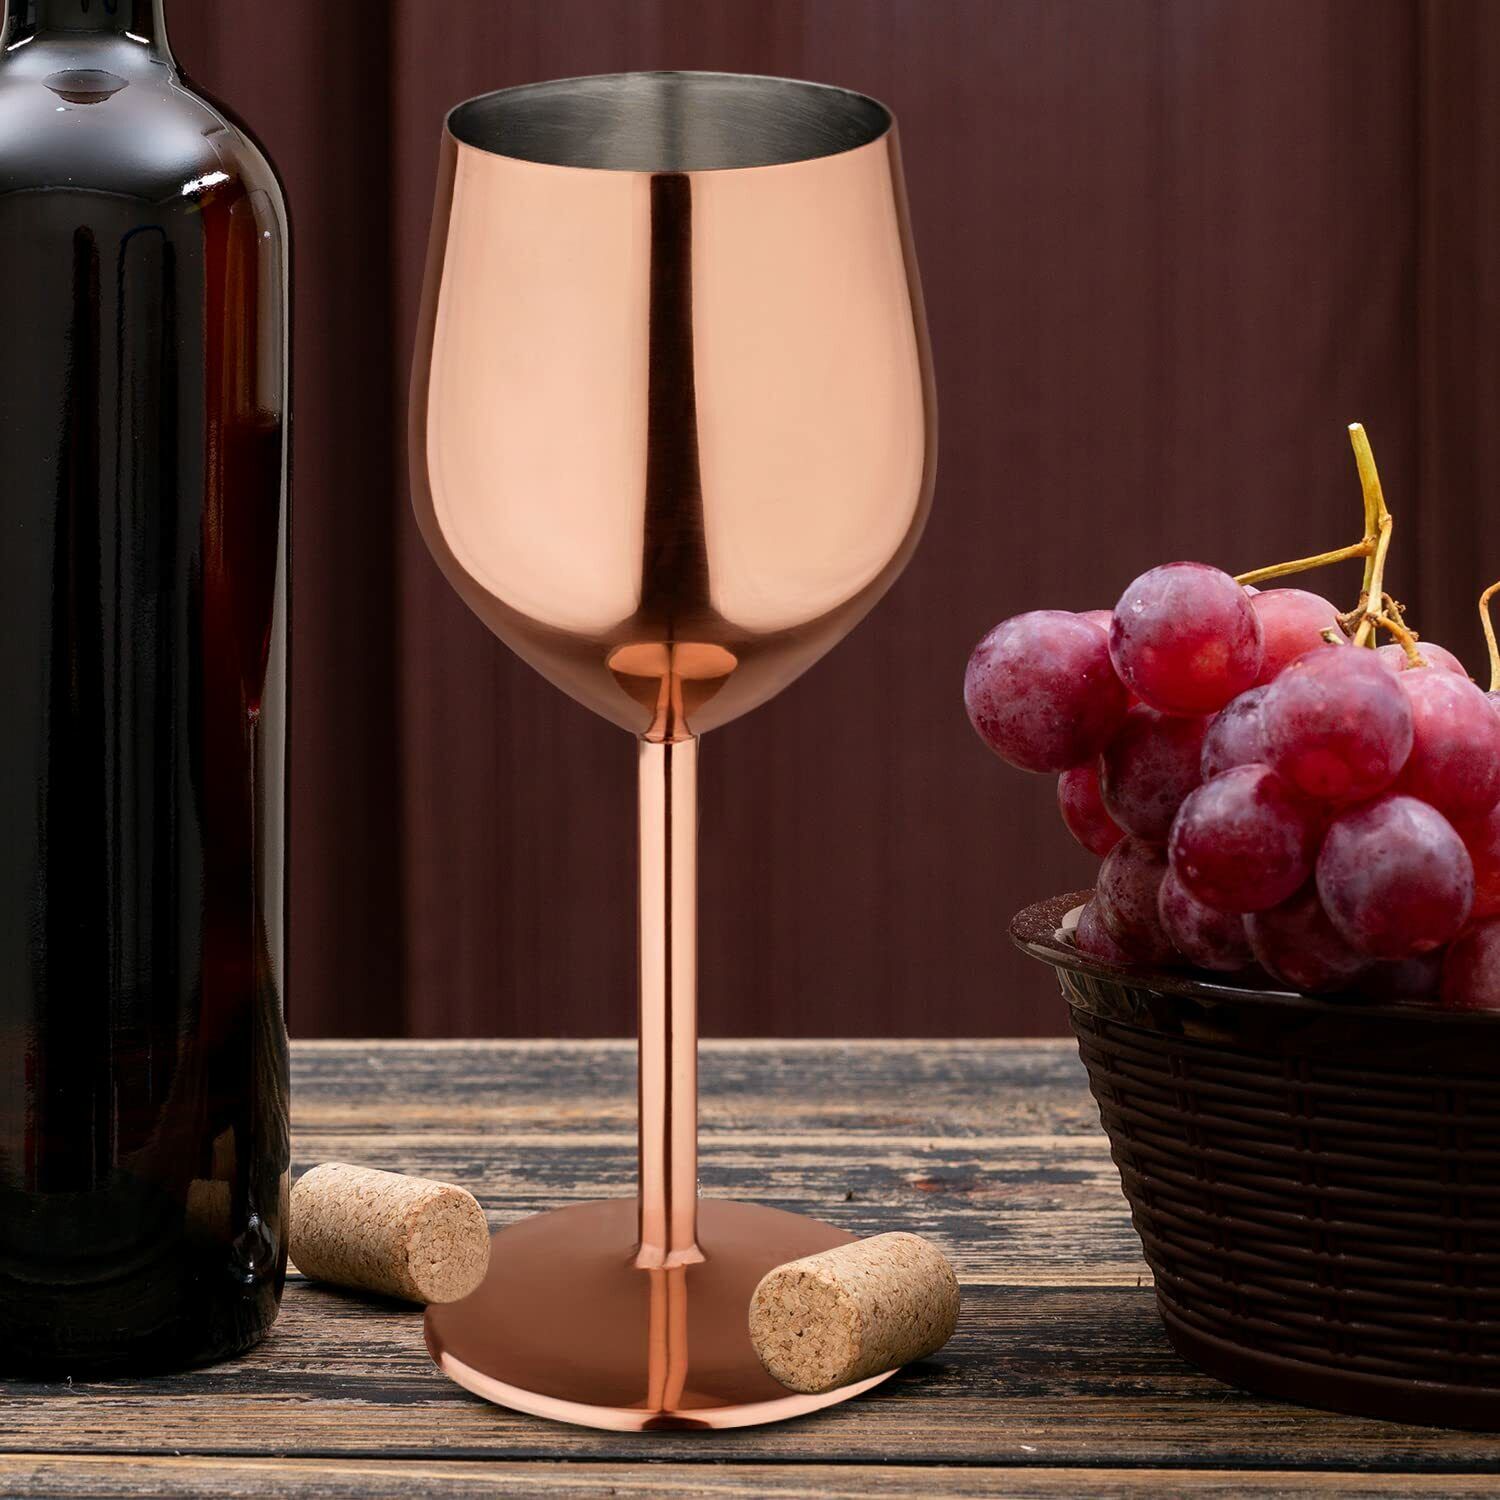 Stainless Steel Stemmed Wine Glasses: Copper Finish